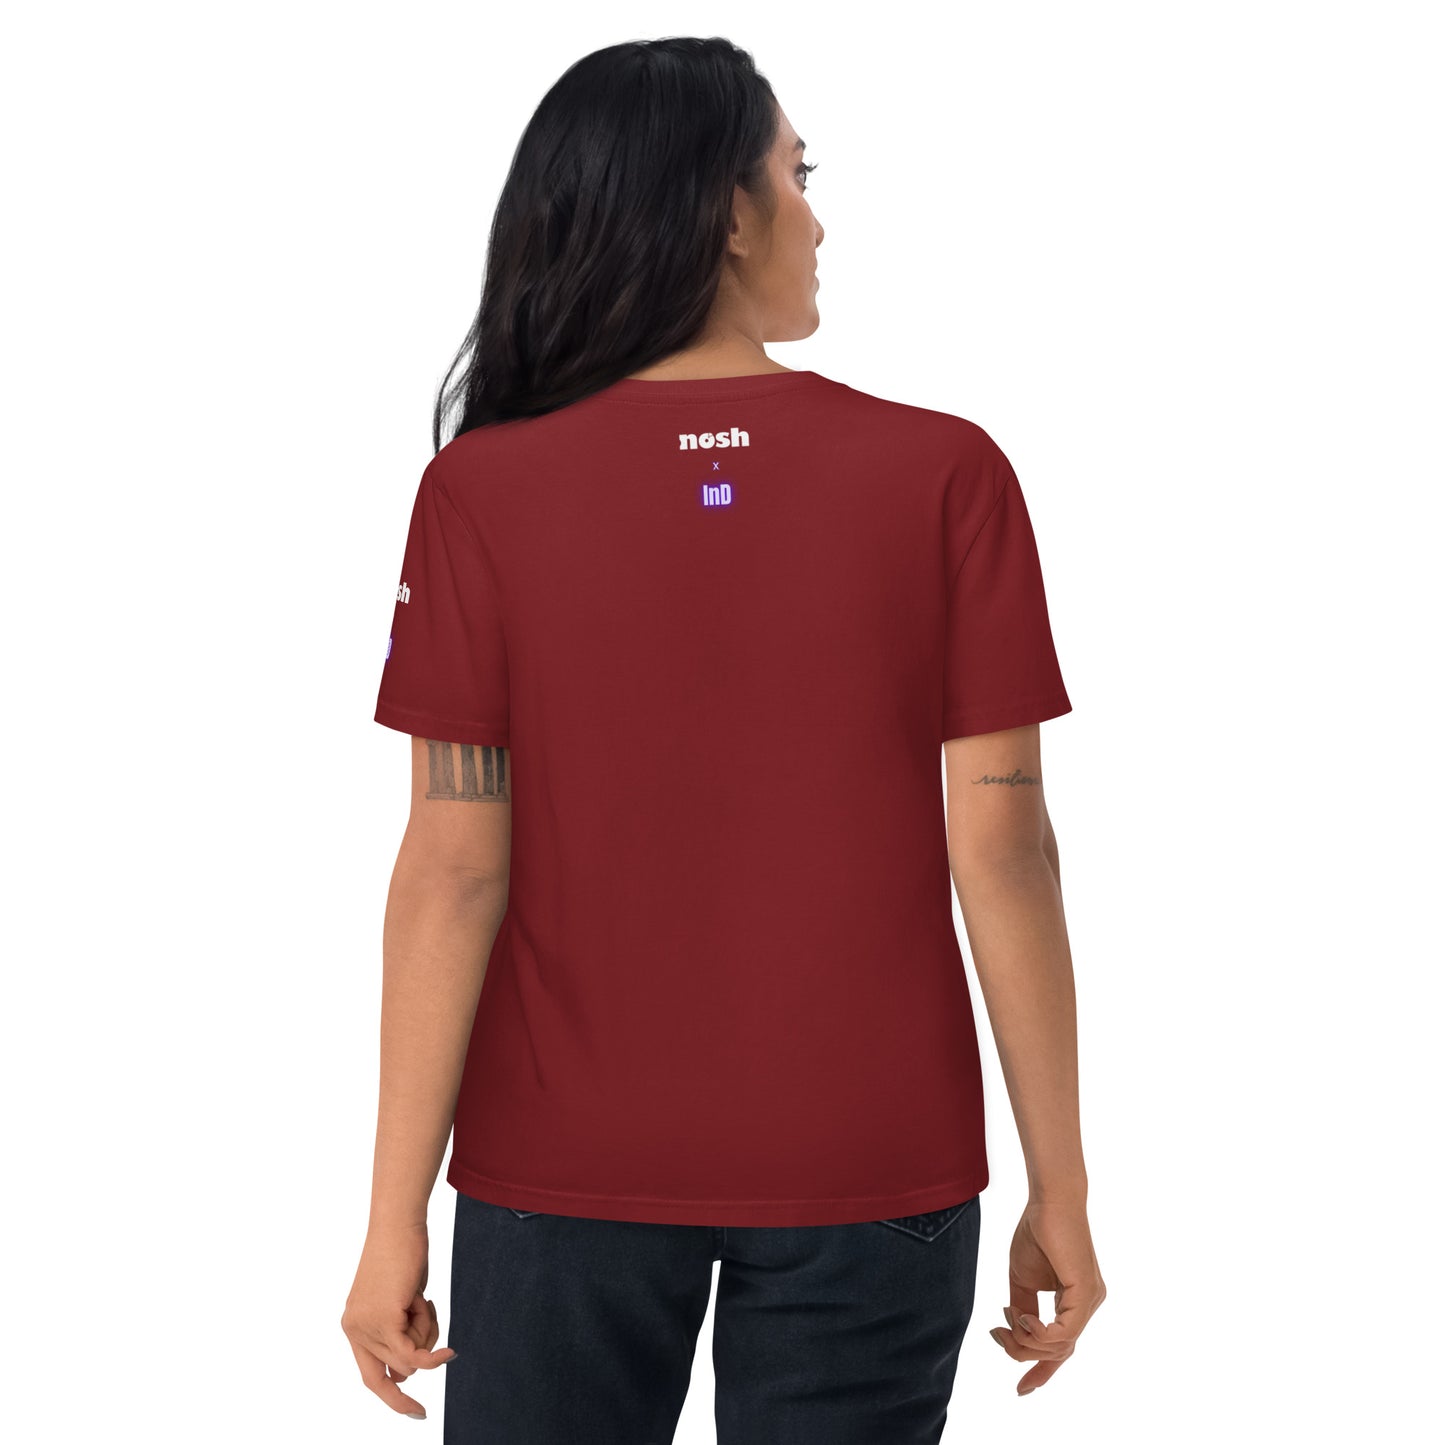 Unisex organic cotton t-shirt - don't be a dick #646